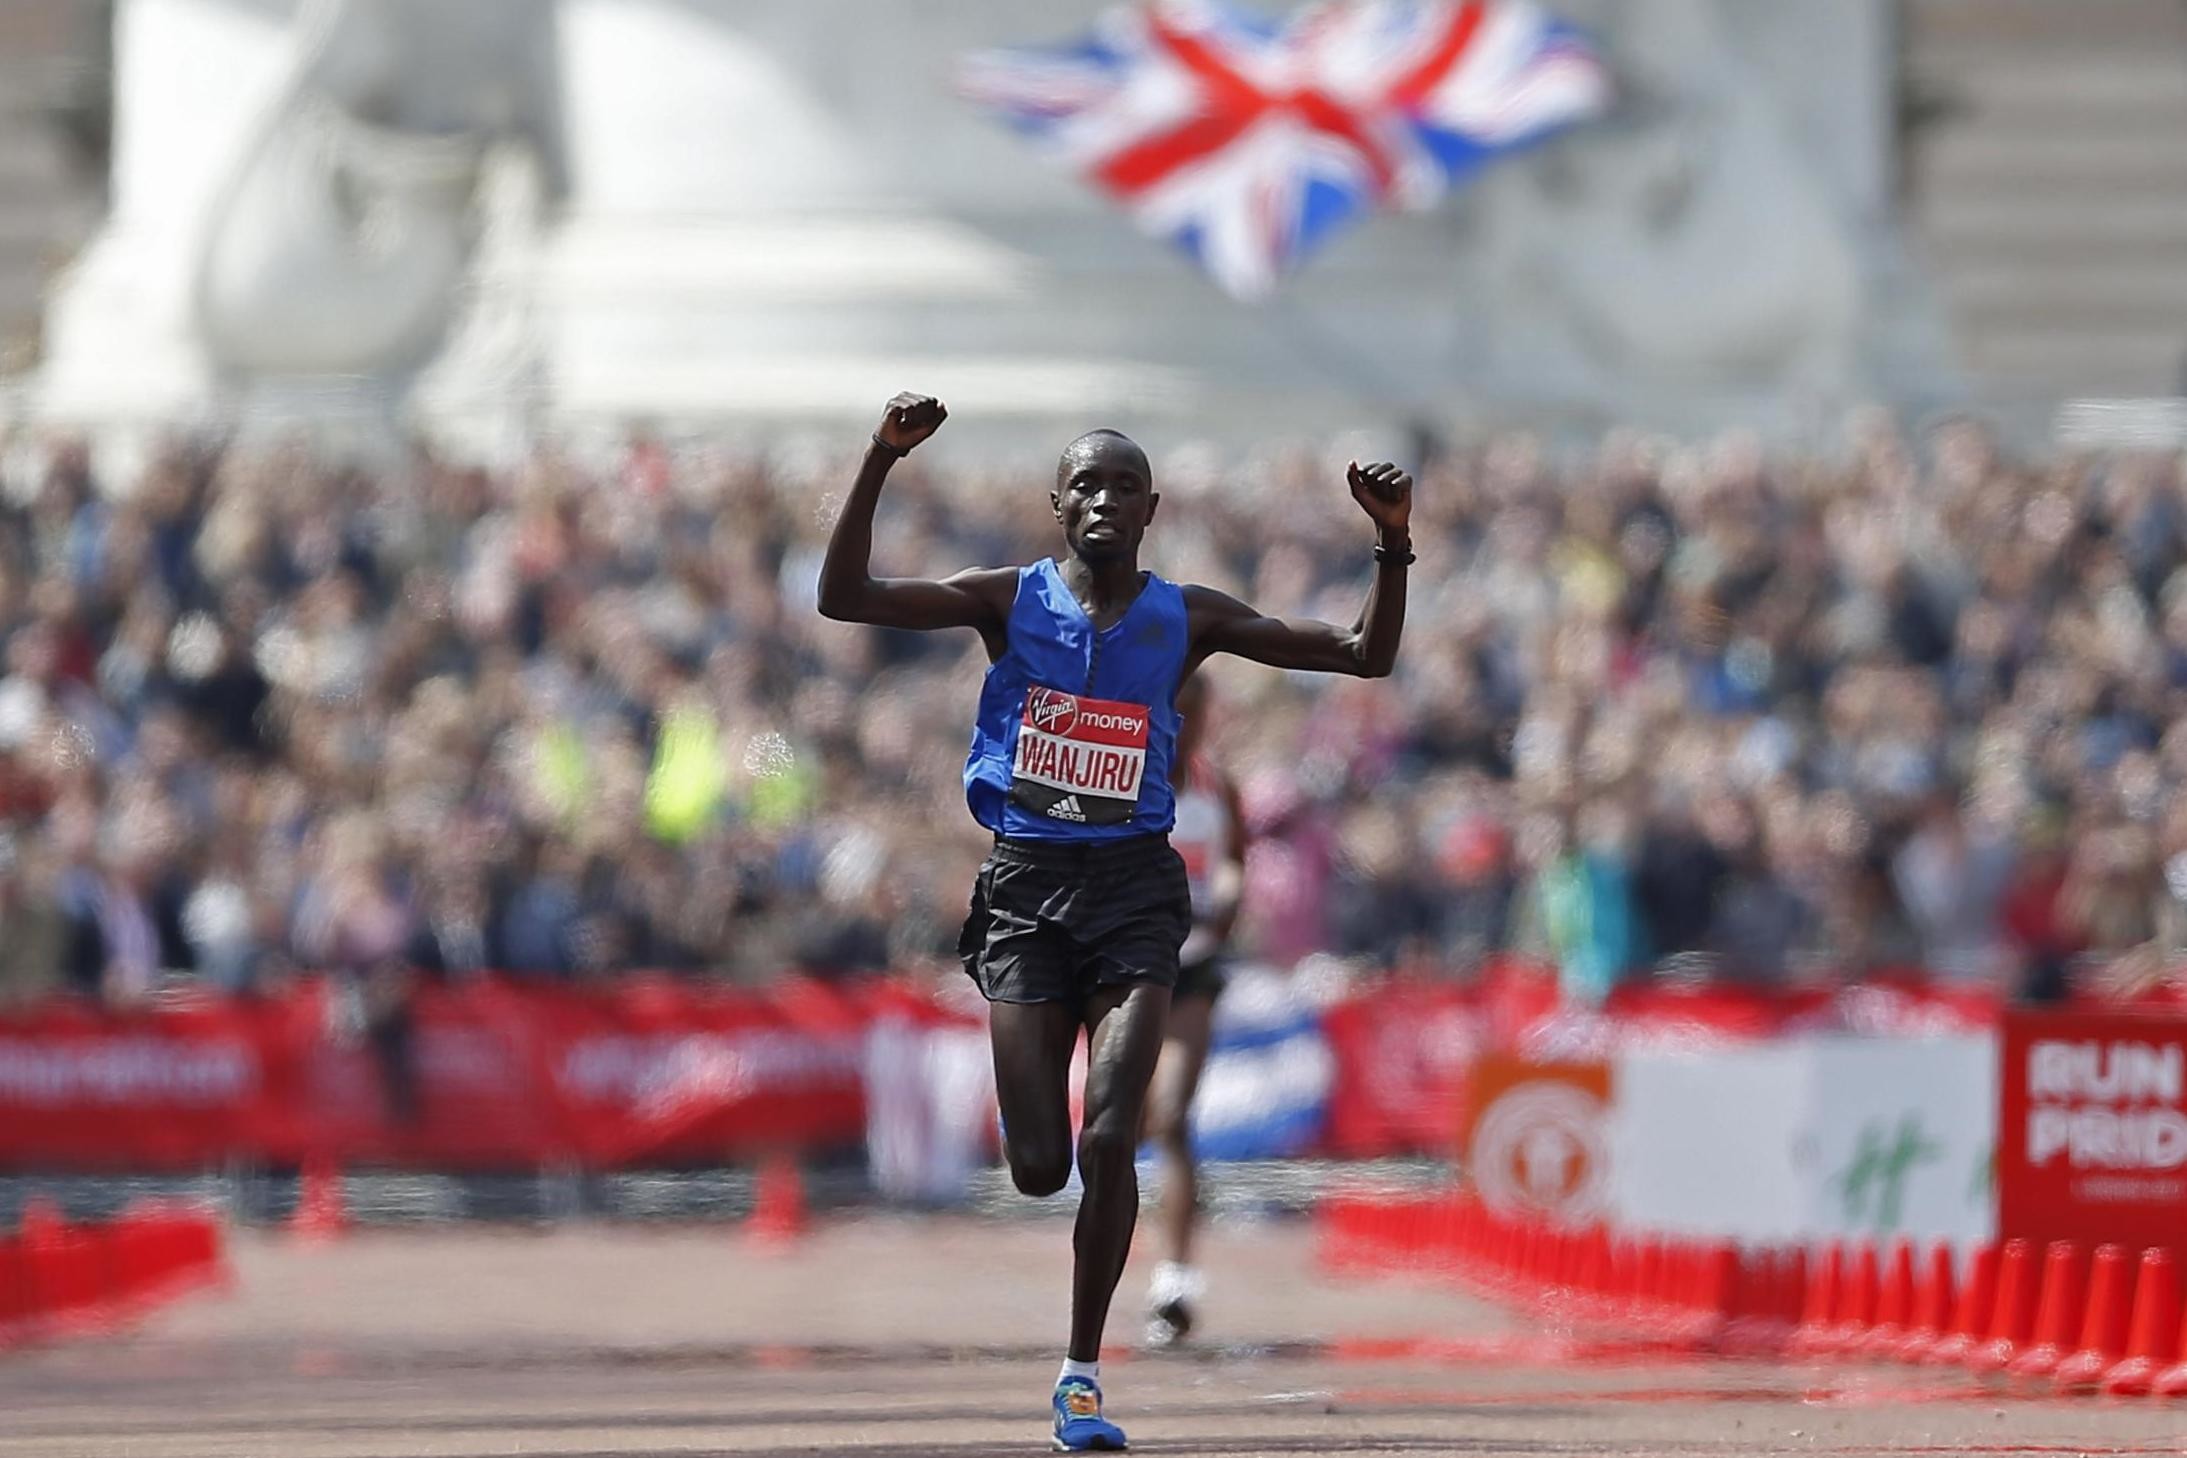 London's Marathon winner Wanjiru to Run London Big Half